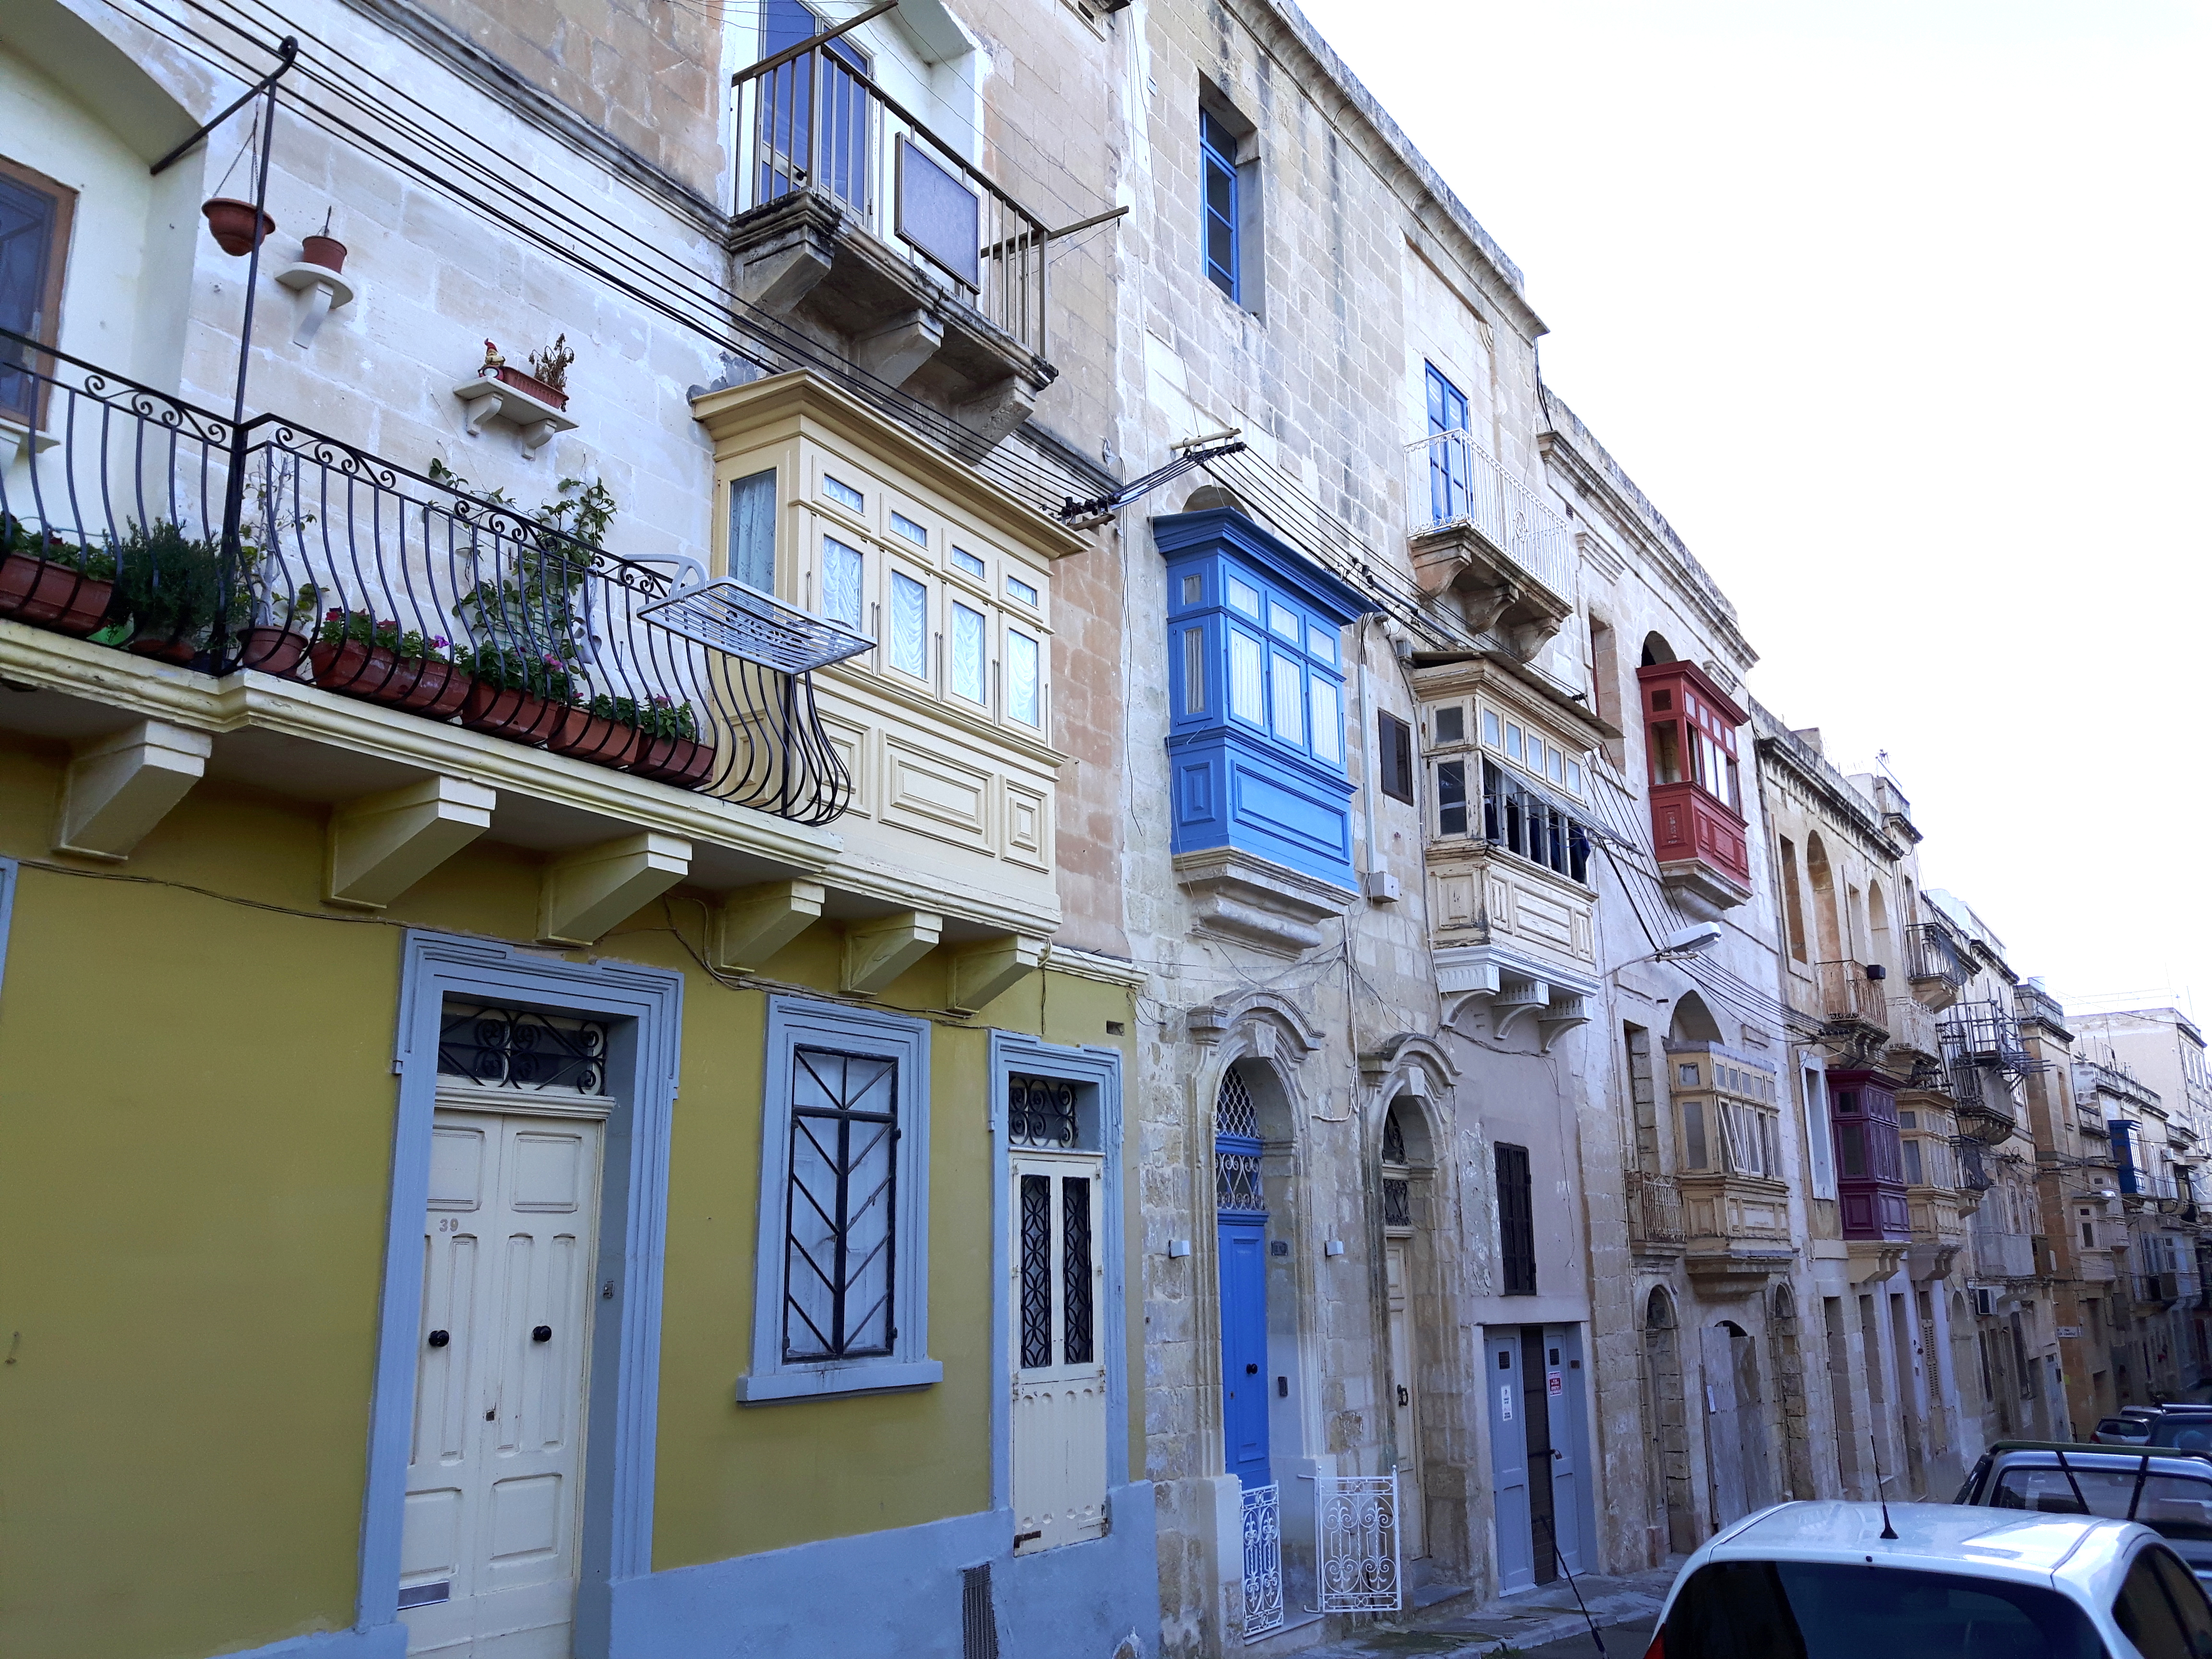 Senglea_The_Three_Cities_Malta